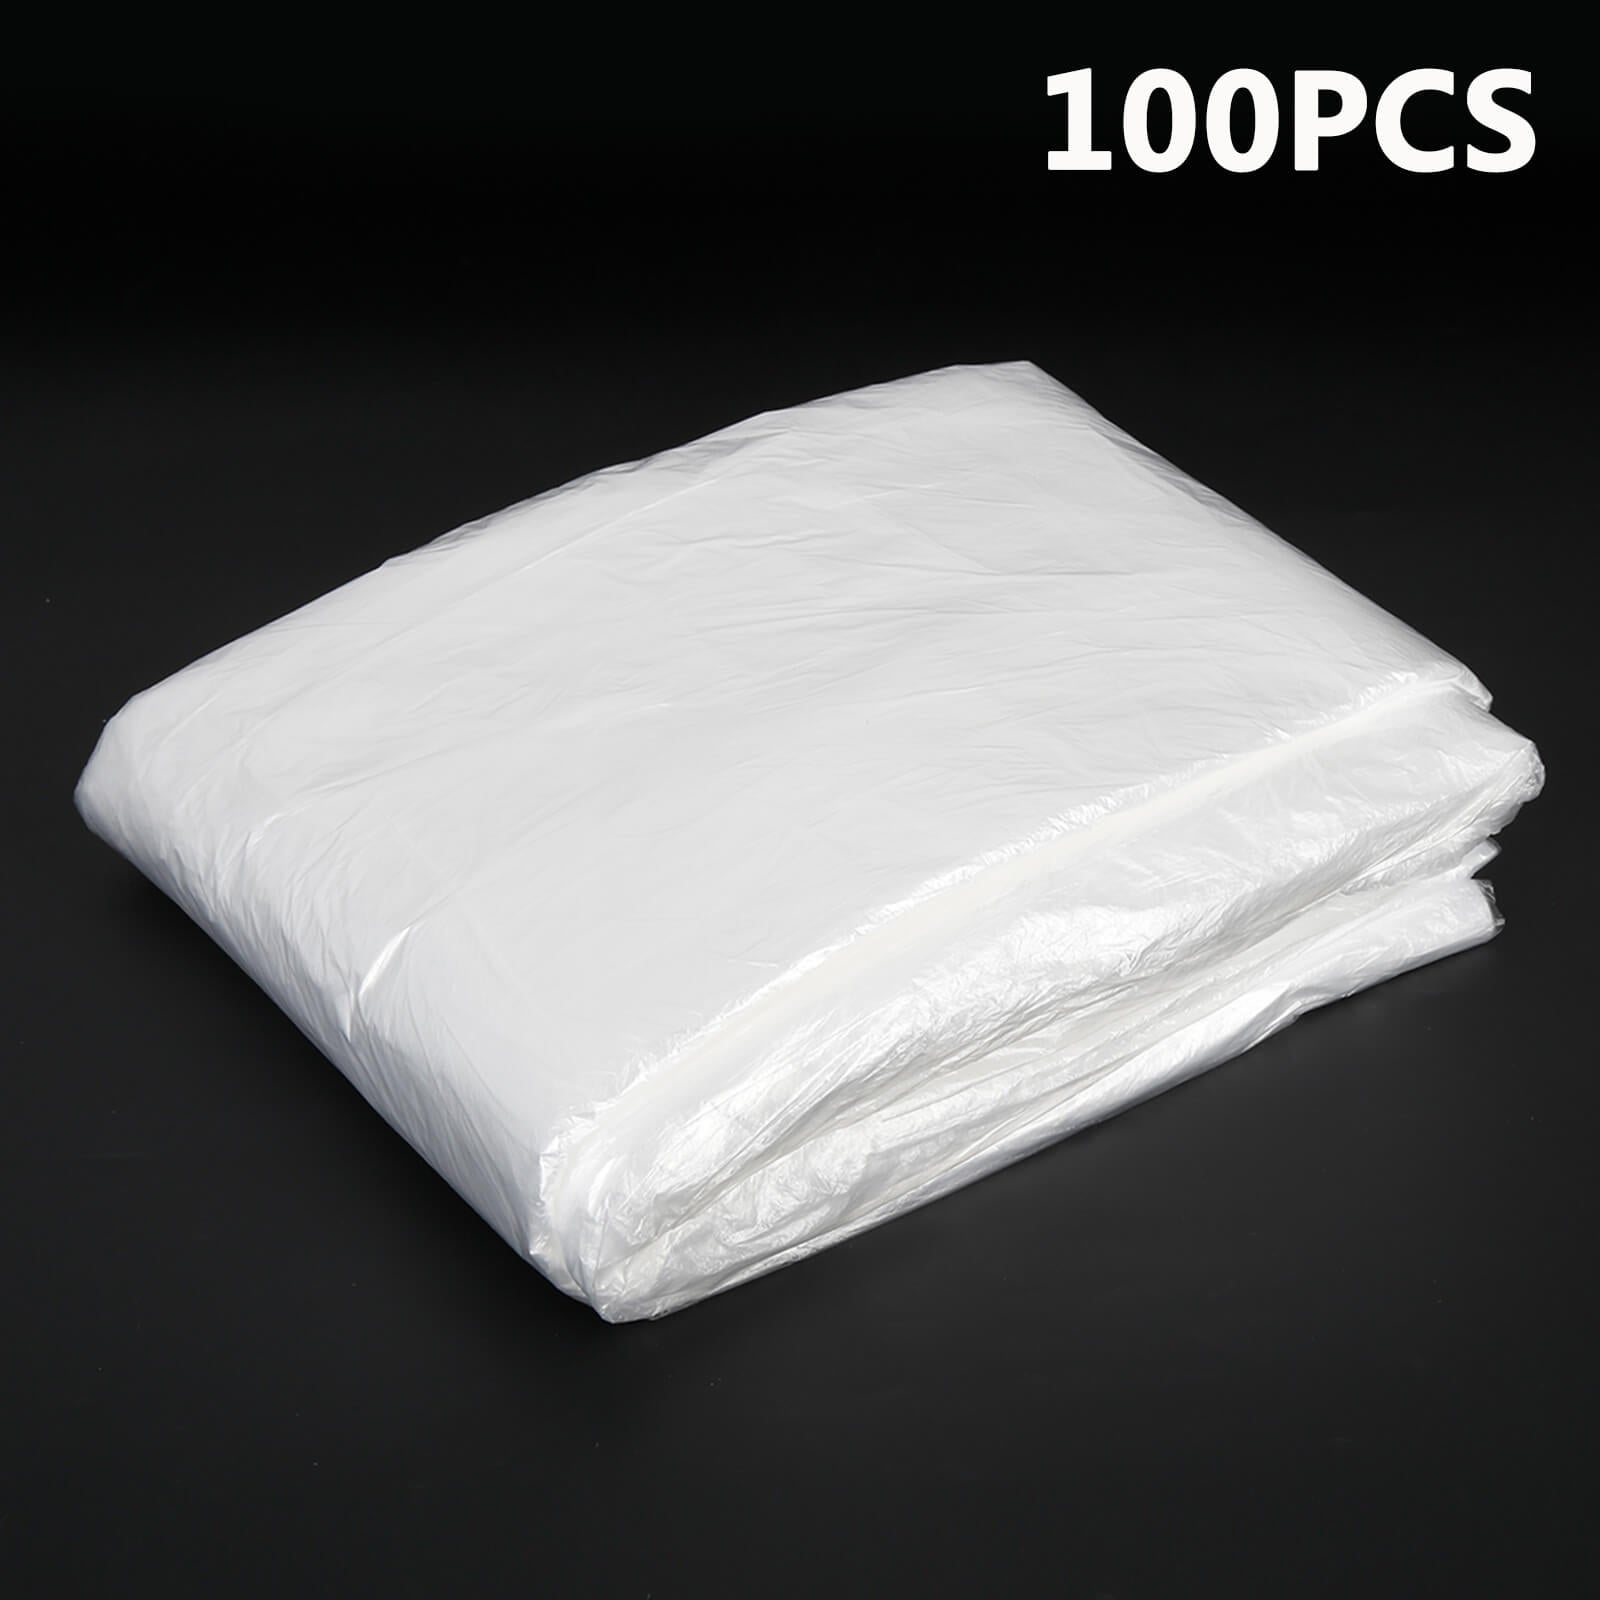 100pcs Disposable Plastic Car Seat Cover packages